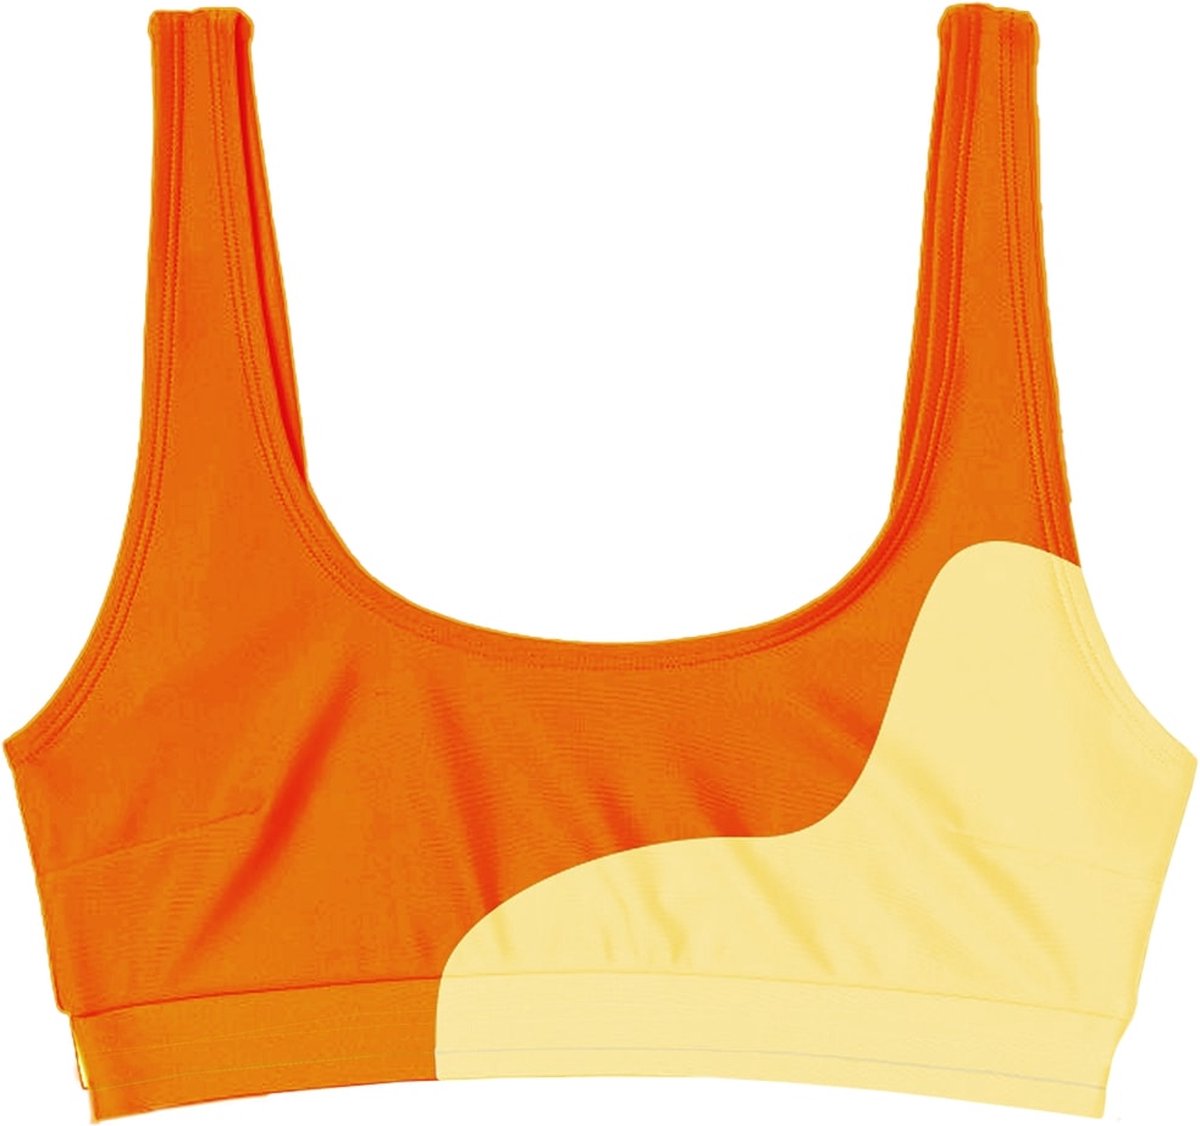 Sea'sons Official - Kleurveranderend - Brassiere Bikini Top - Oranje-Rood - XL